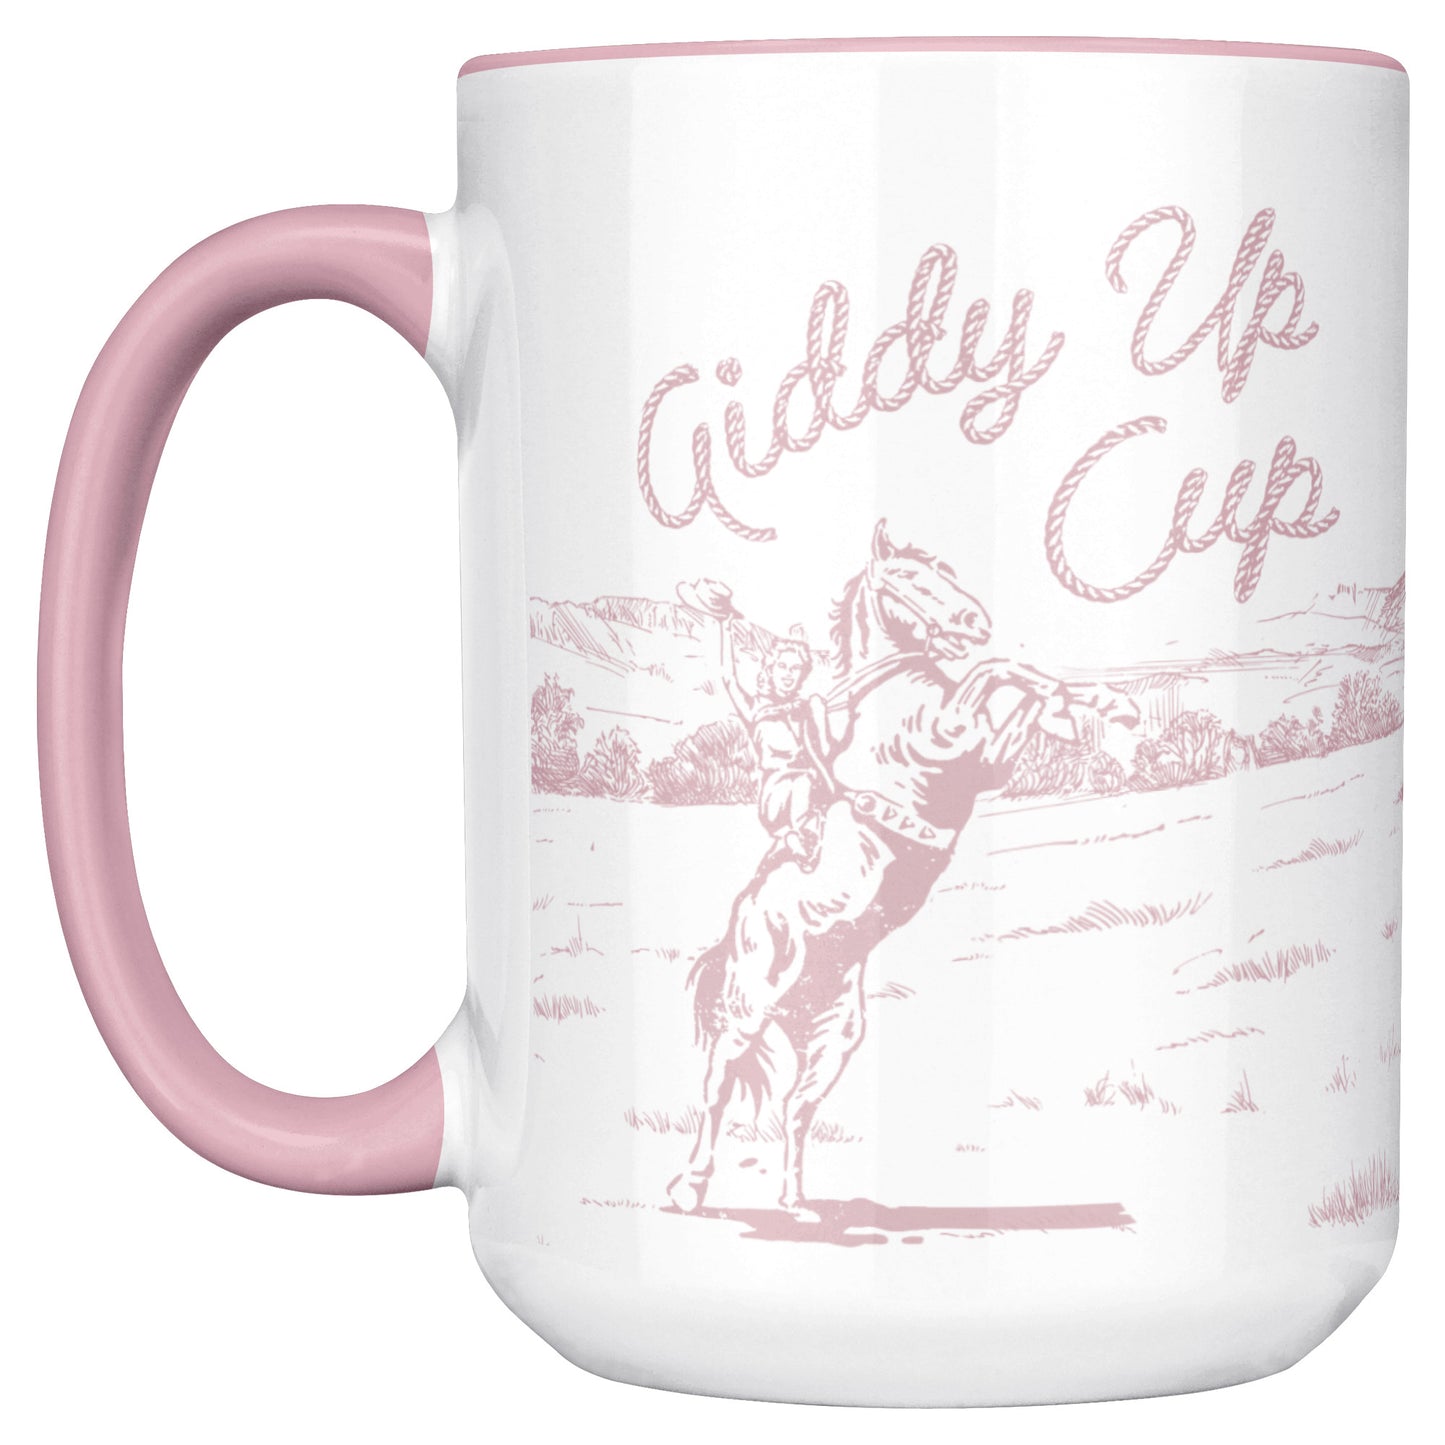 GIDDY UP CUP - PINK HANDLE - PINK + ORANGE ART